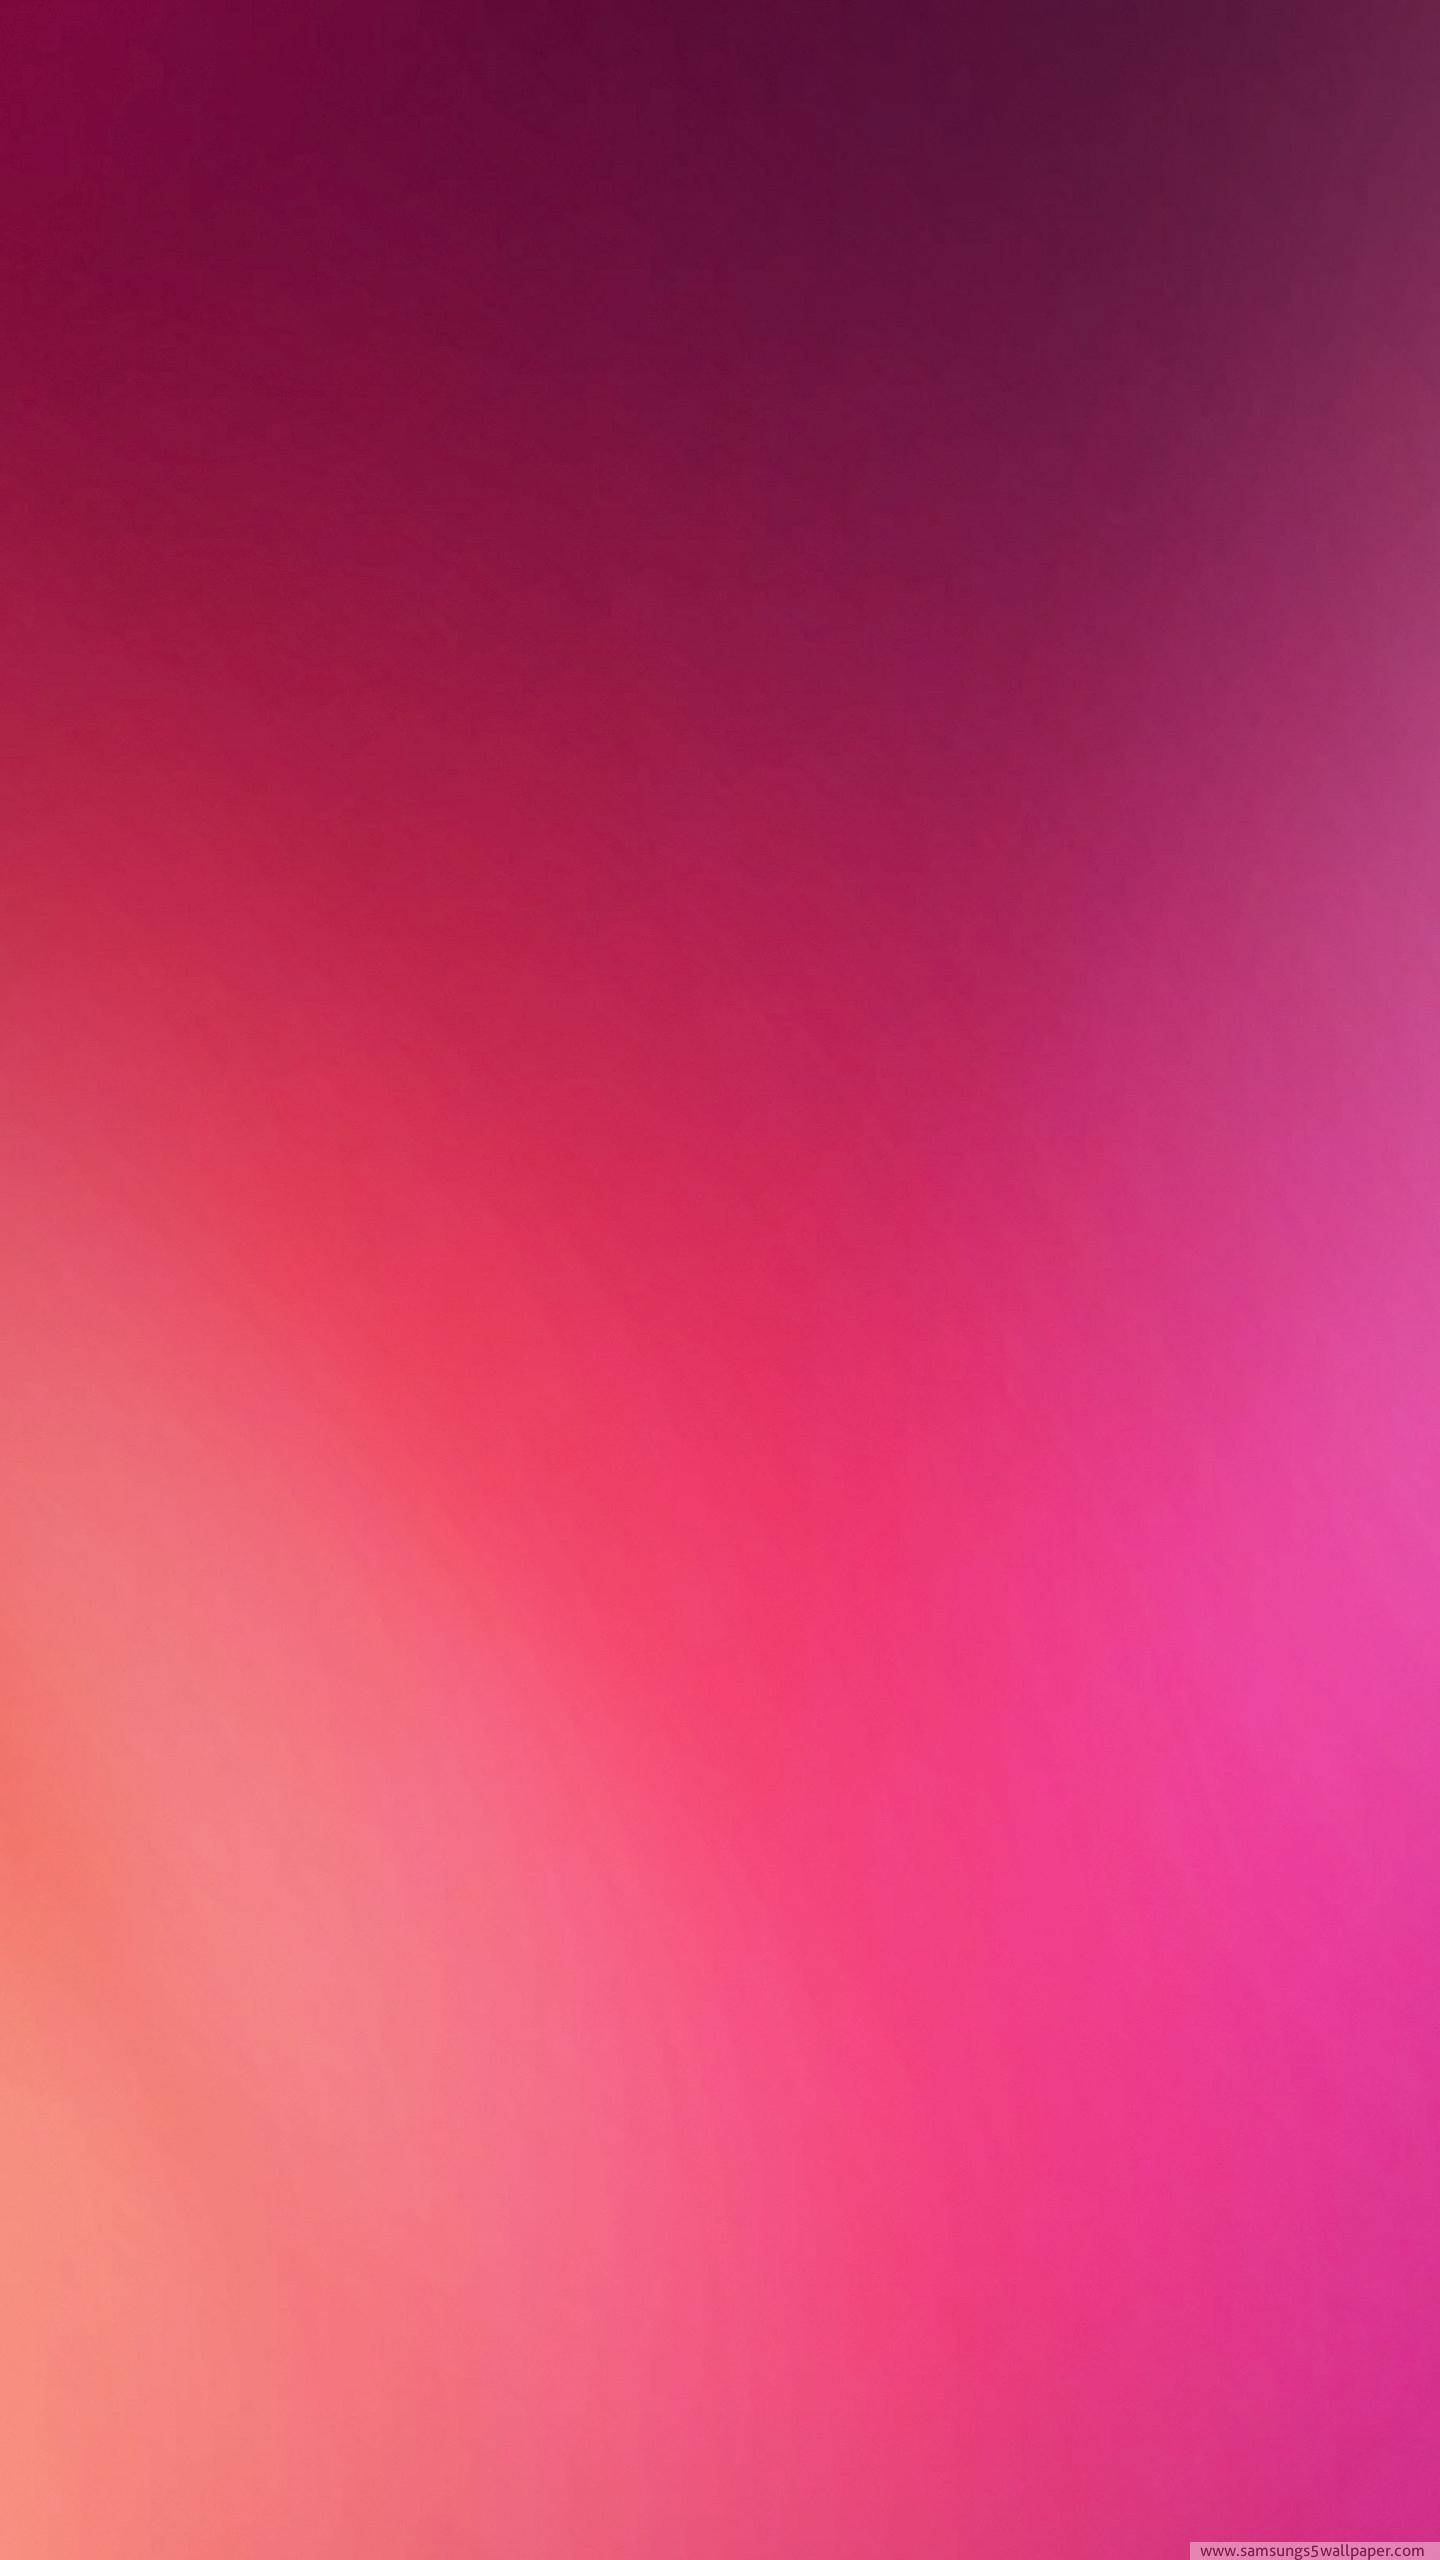 Download Samsung Galaxy S6 Pink Gradient Wallpaper 